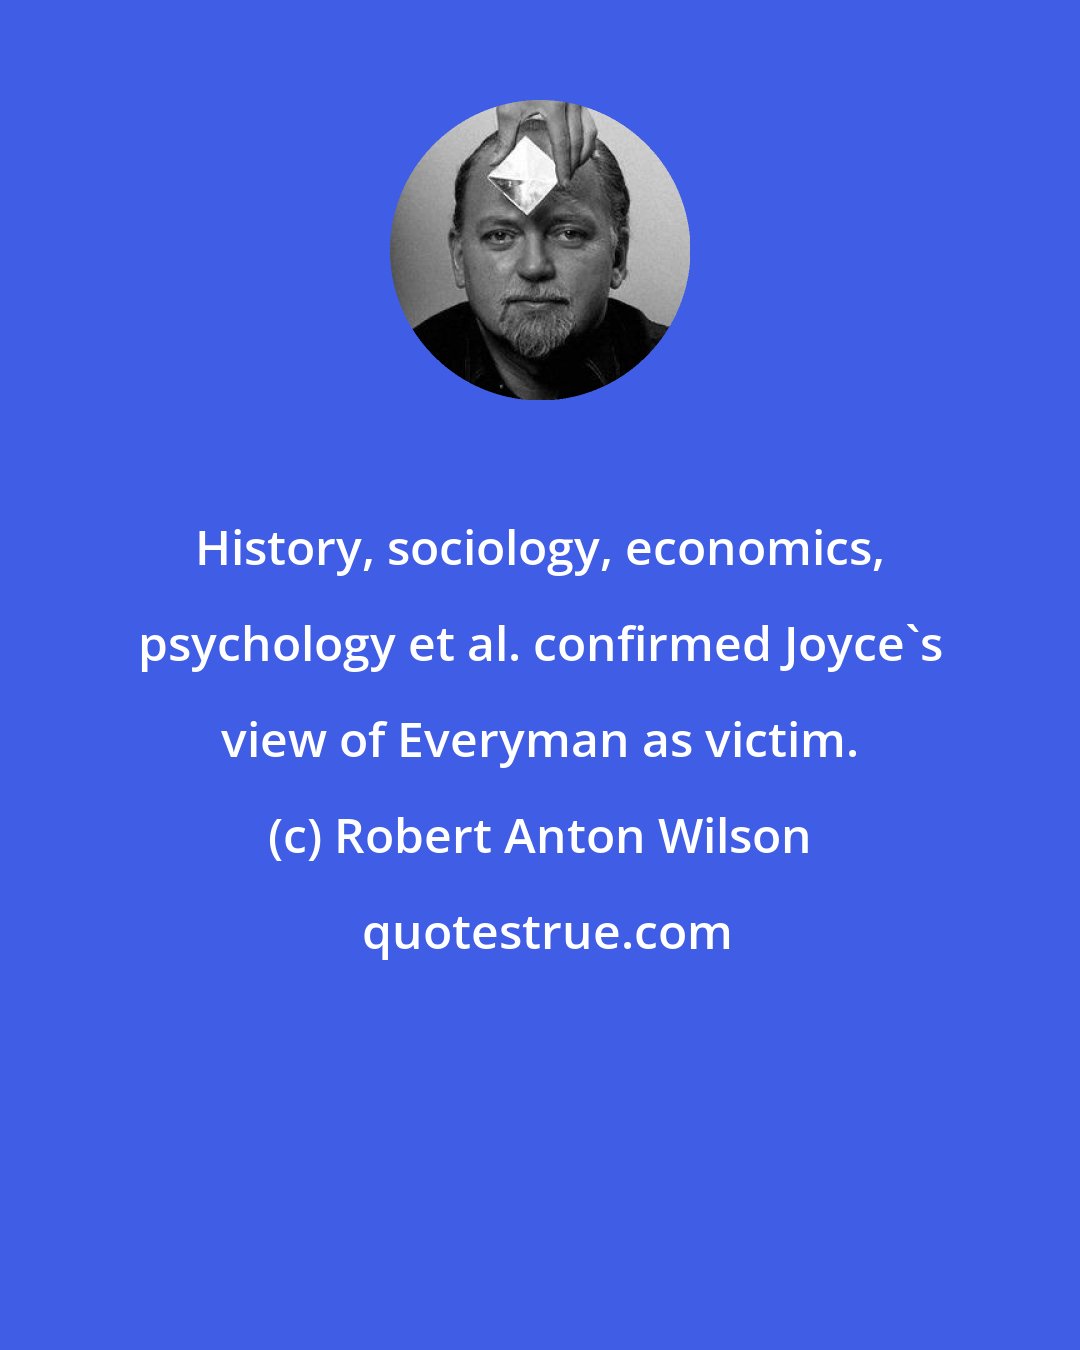 Robert Anton Wilson: History, sociology, economics, psychology et al. confirmed Joyce's view of Everyman as victim.